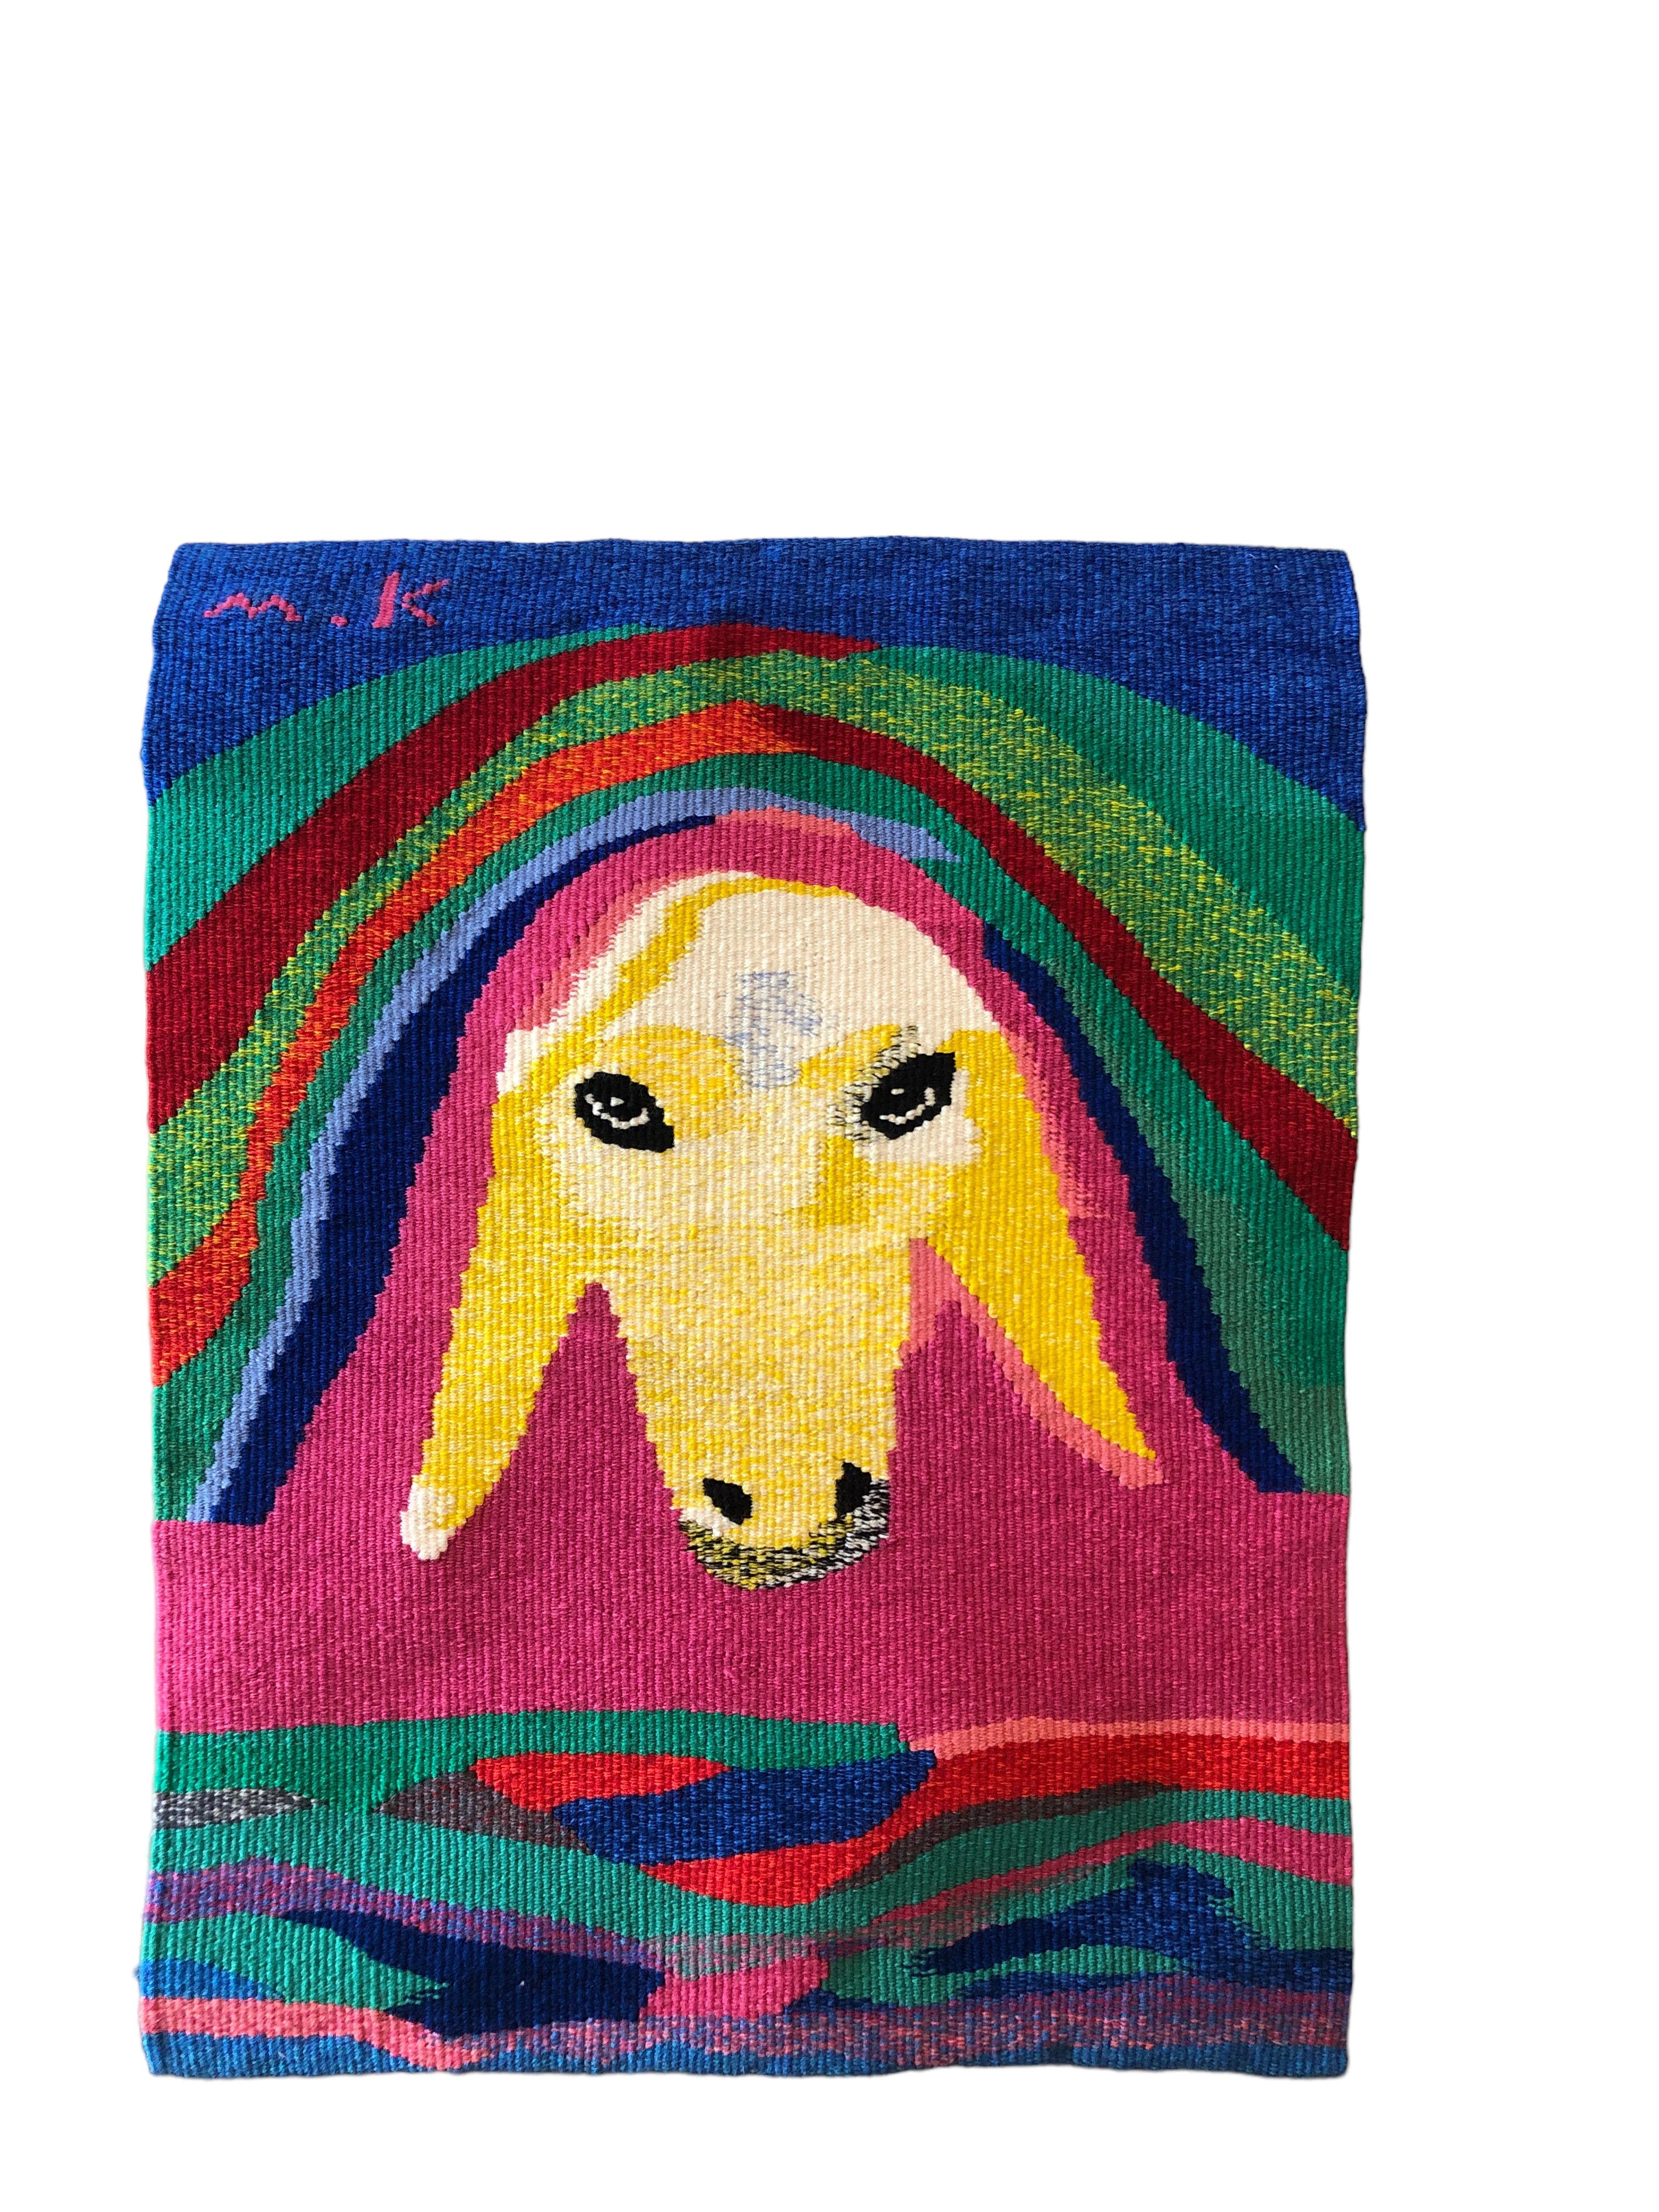  Israeli Hand Woven Colorful Wool Tapestry Weaving Menashe Kadishman Sheep Head  For Sale 7